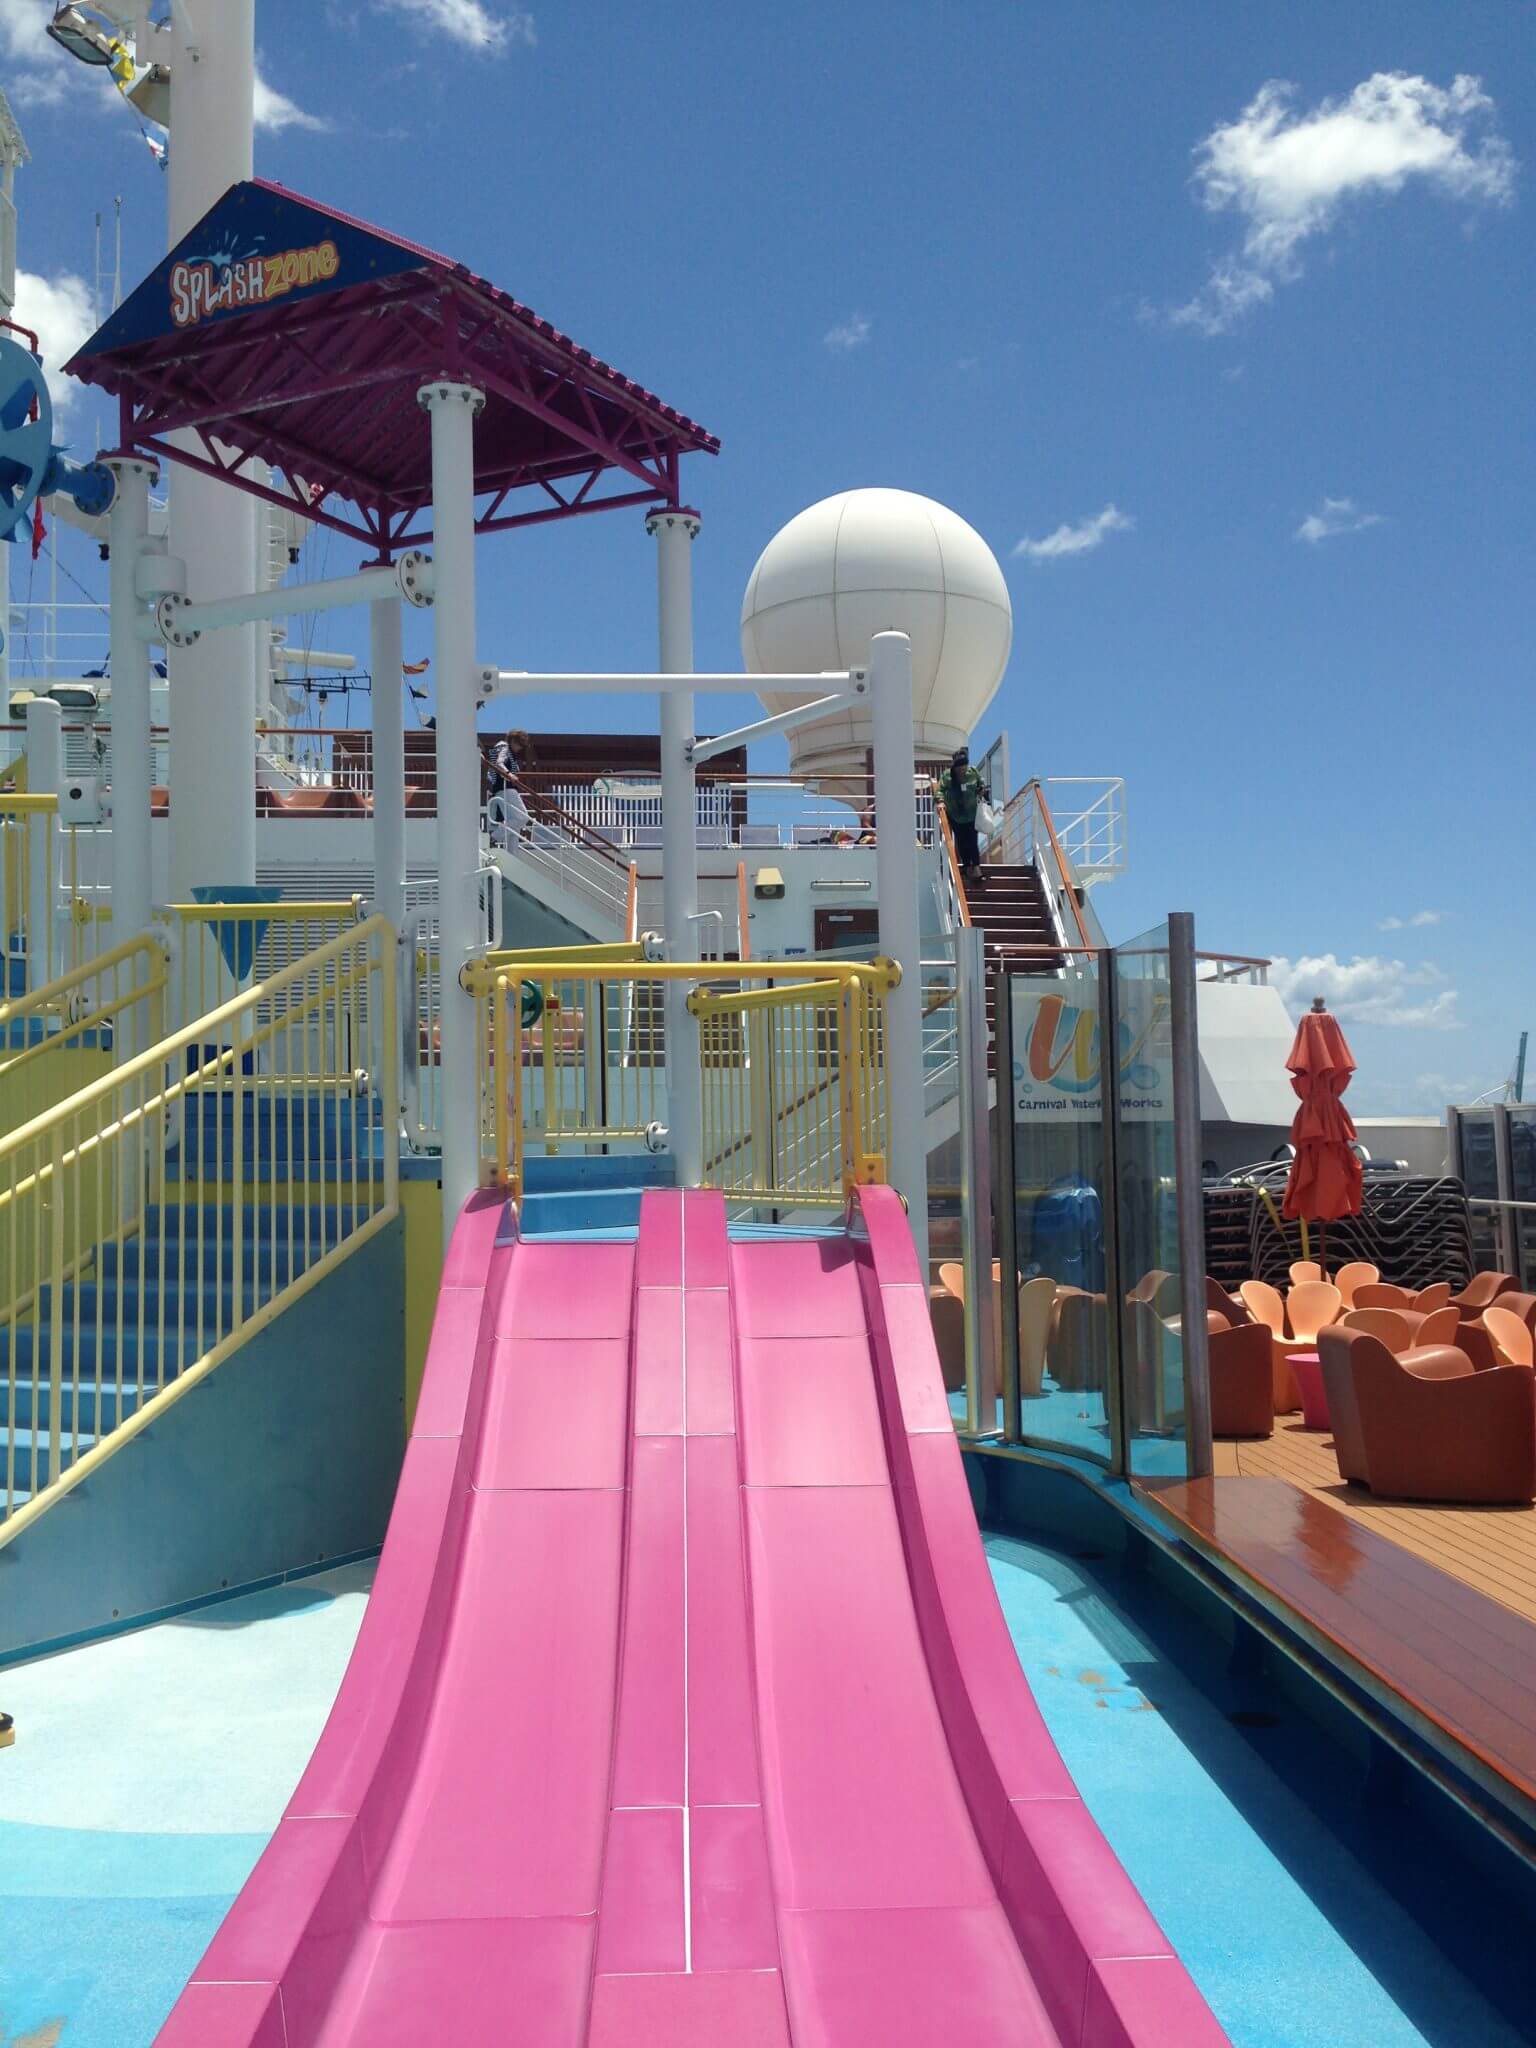 Small Slide at the Carnival Splash Works